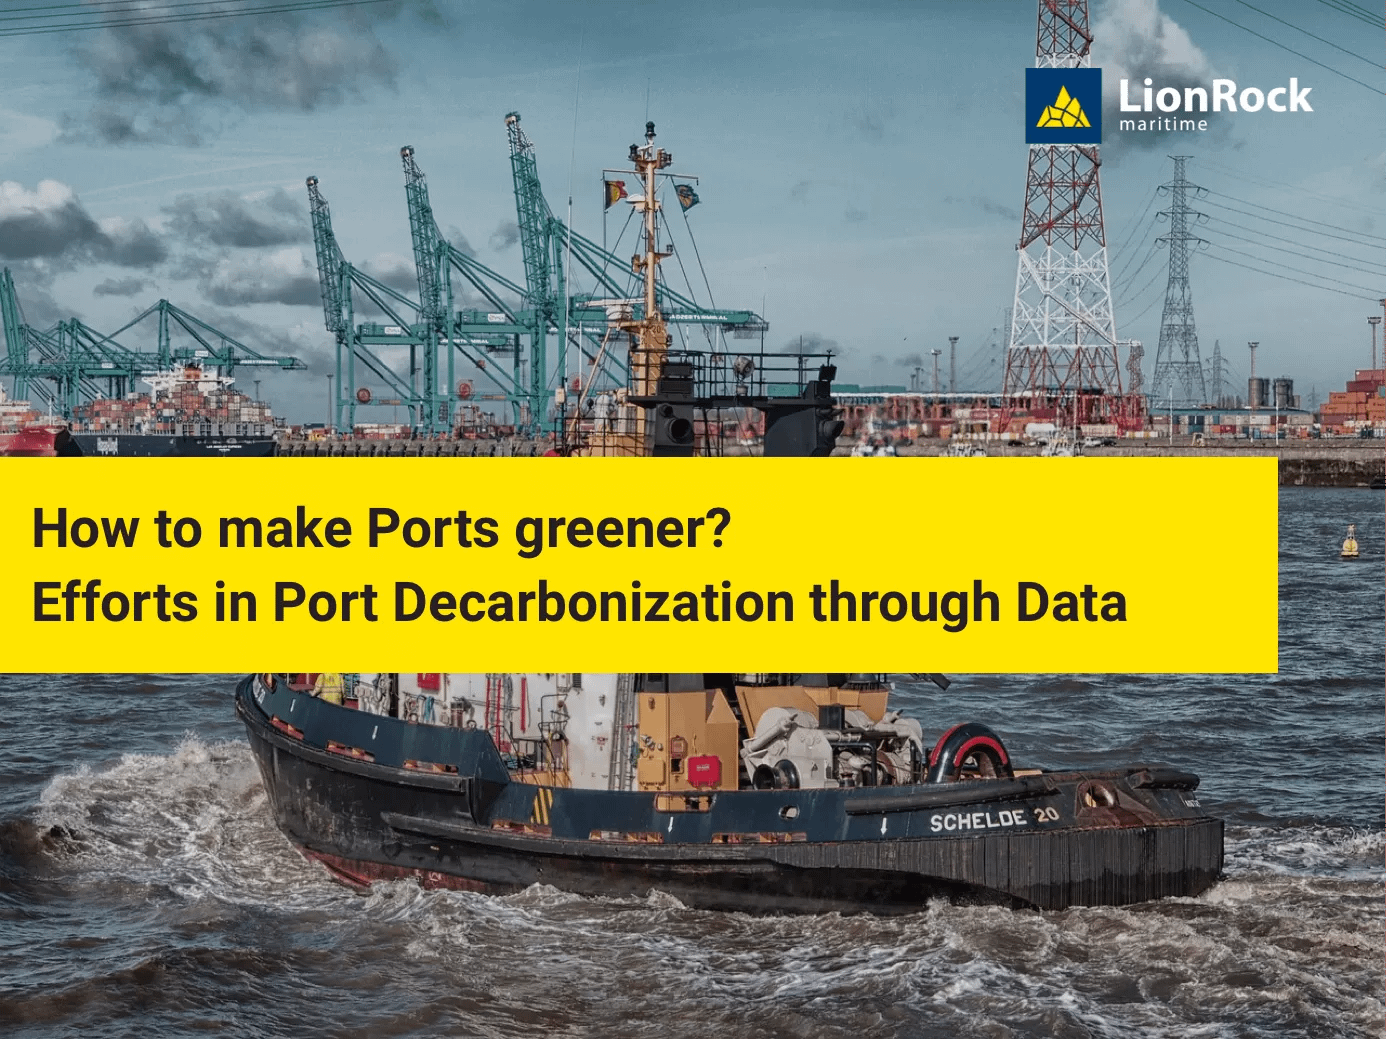 Port decarbonization - Green ports - Shipping carbon footprint | LionRock Maritime